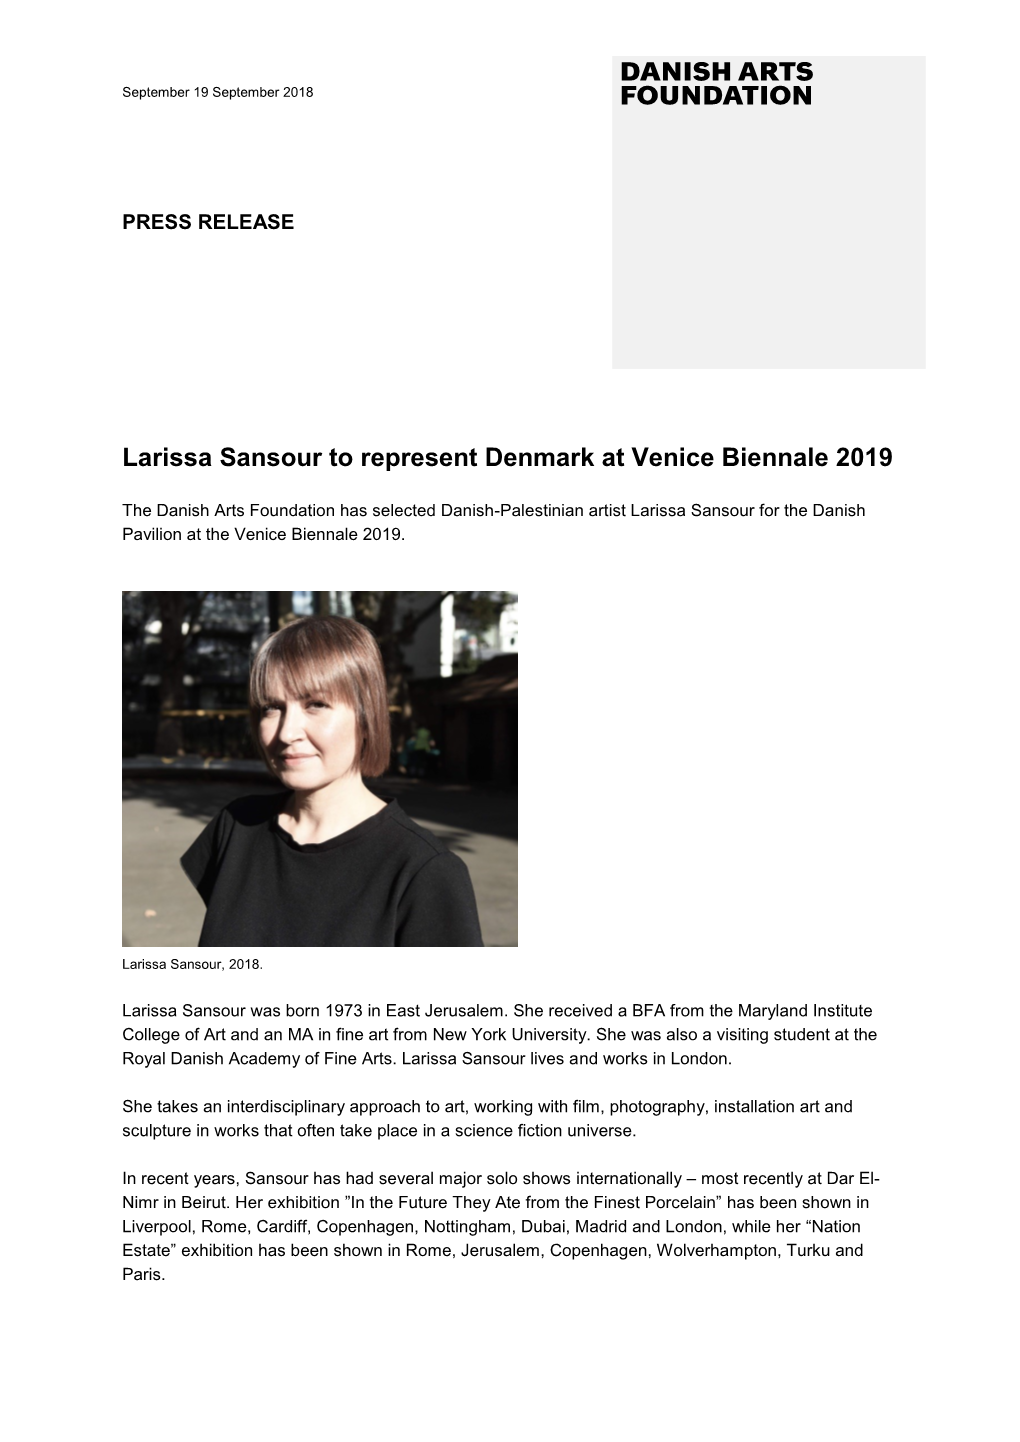 Larissa Sansour to Represent Denmark at Venice Biennale 2019